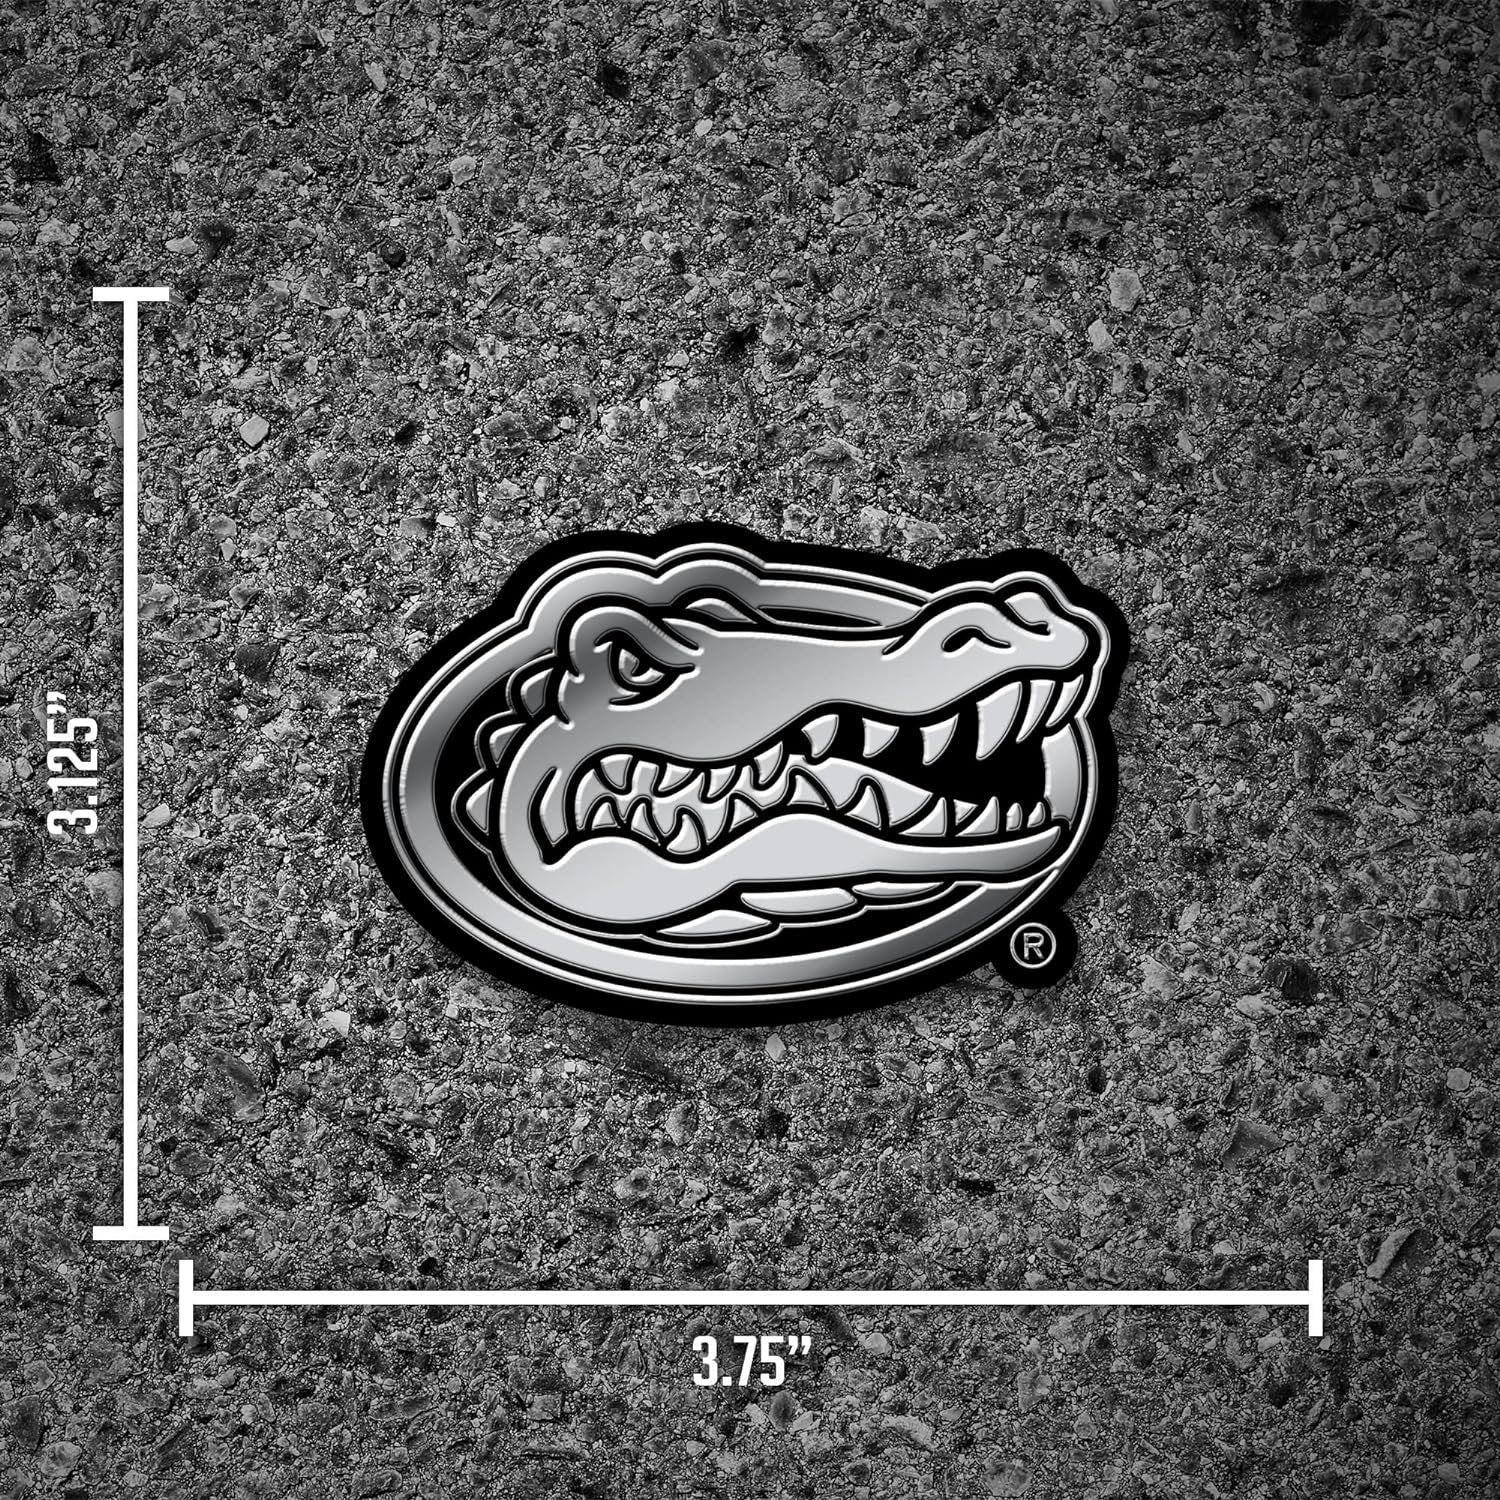 University of Florida Gators Auto Emblem, Silver Chrome Color, Raised Molded Plastic, 3.5 Inch, Adhesive Tape Backing